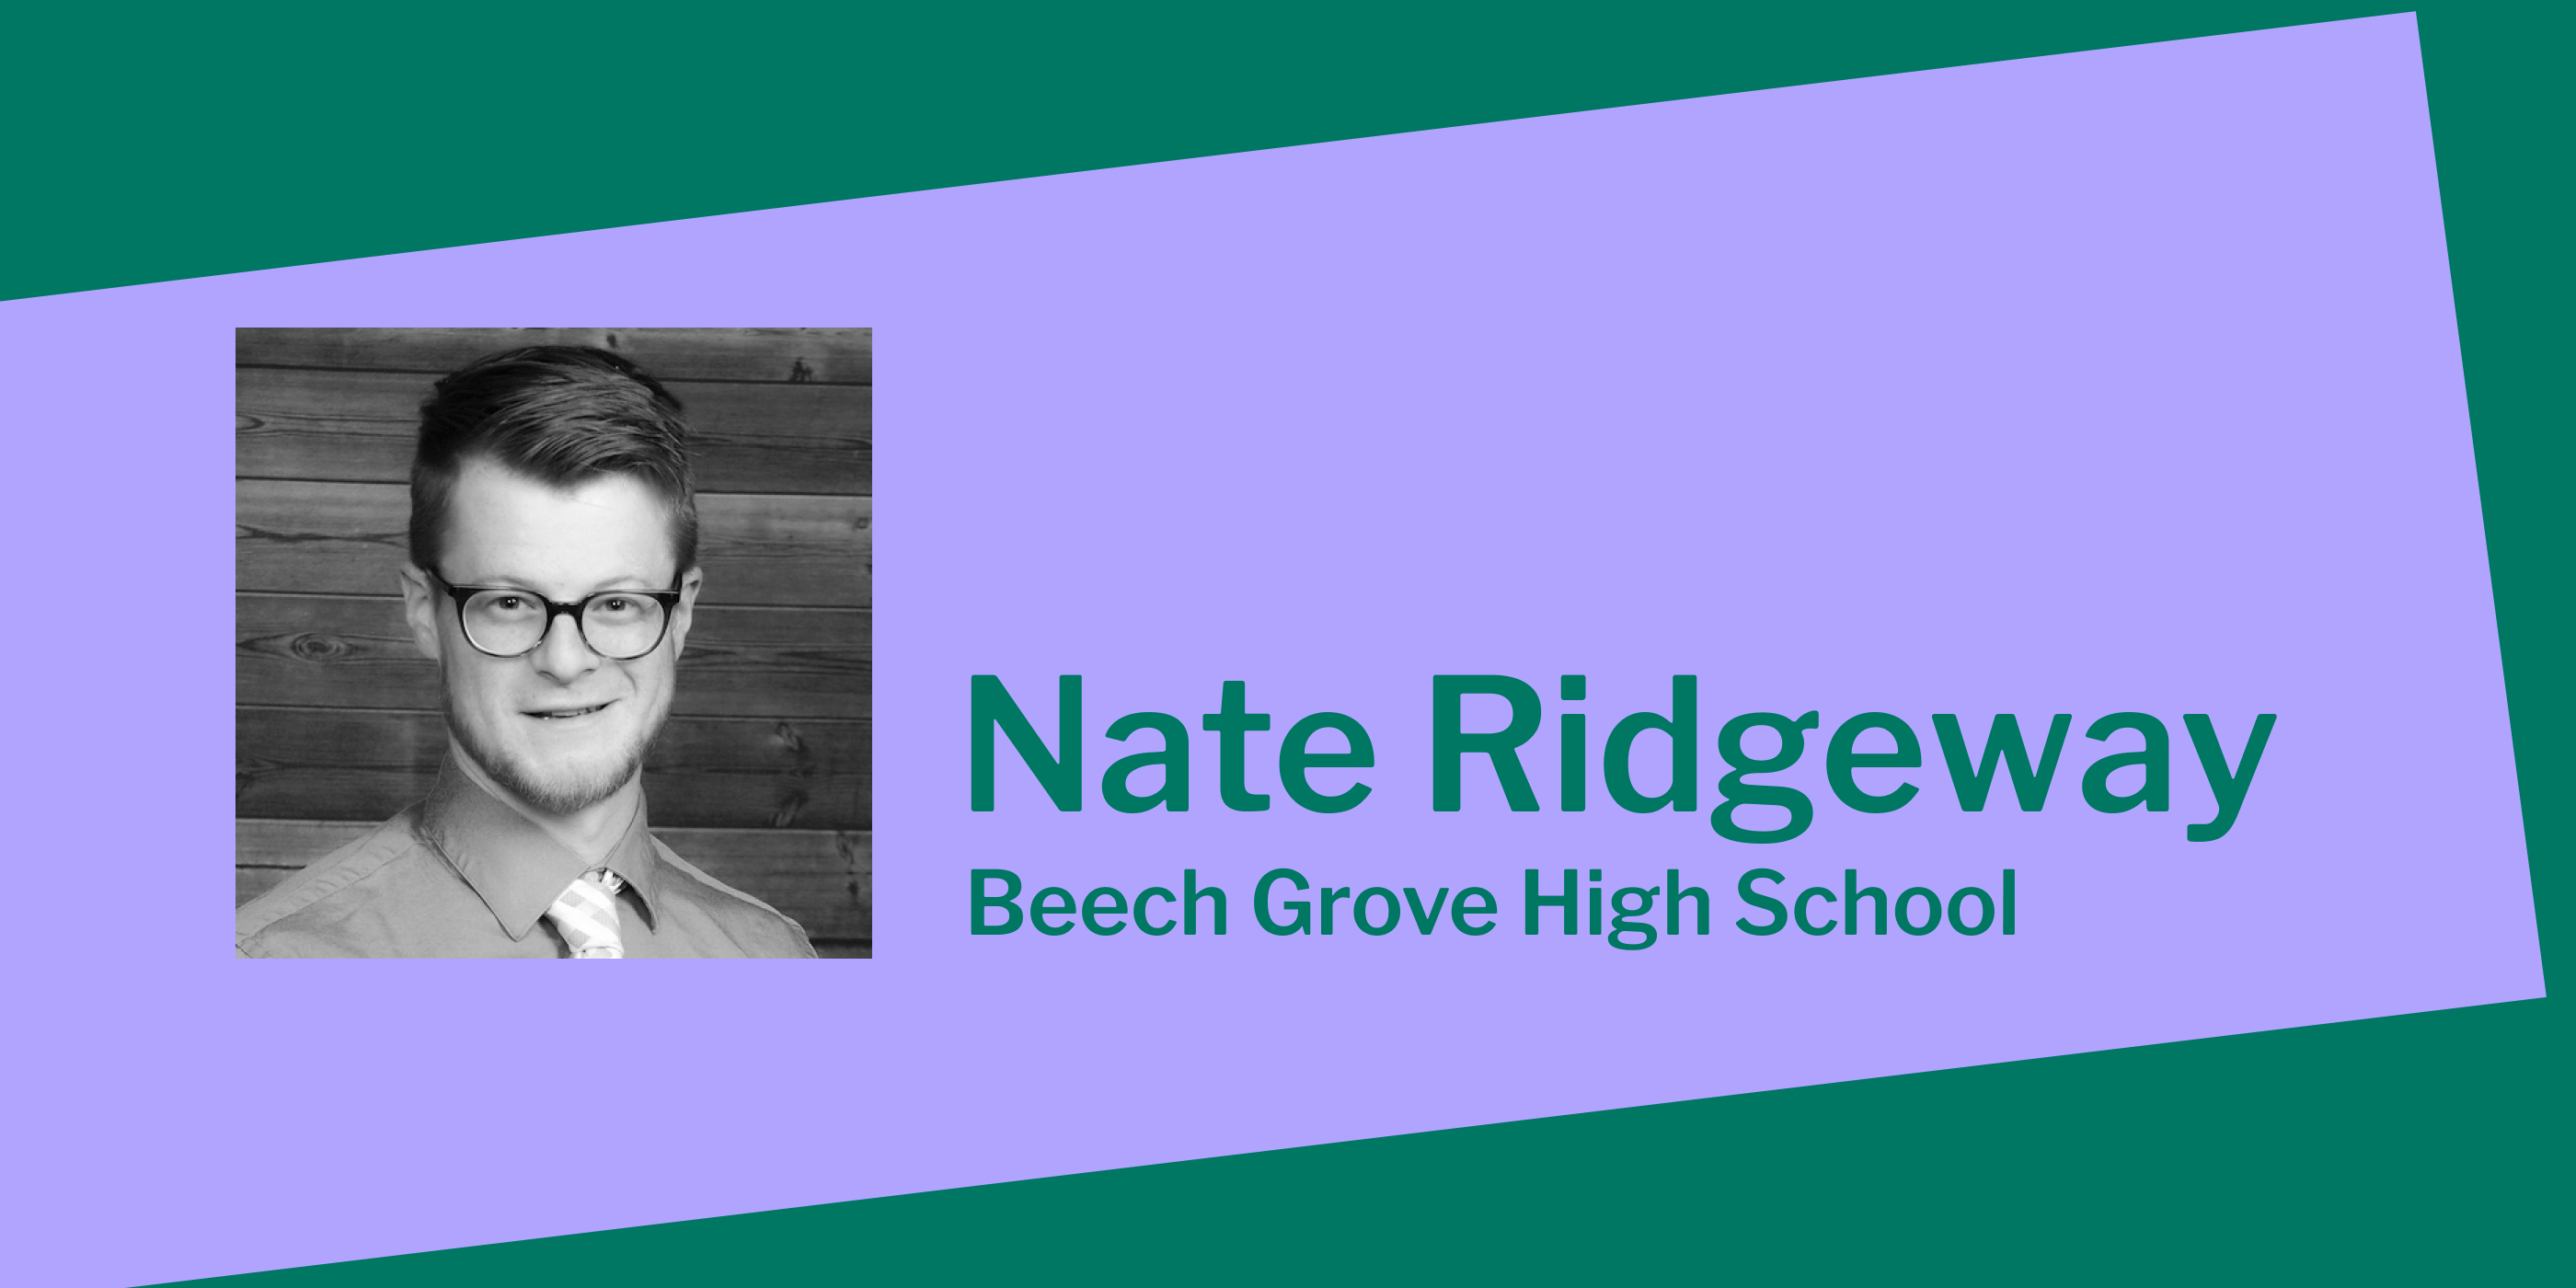 Nate Ridgeway: Beech Grove High School